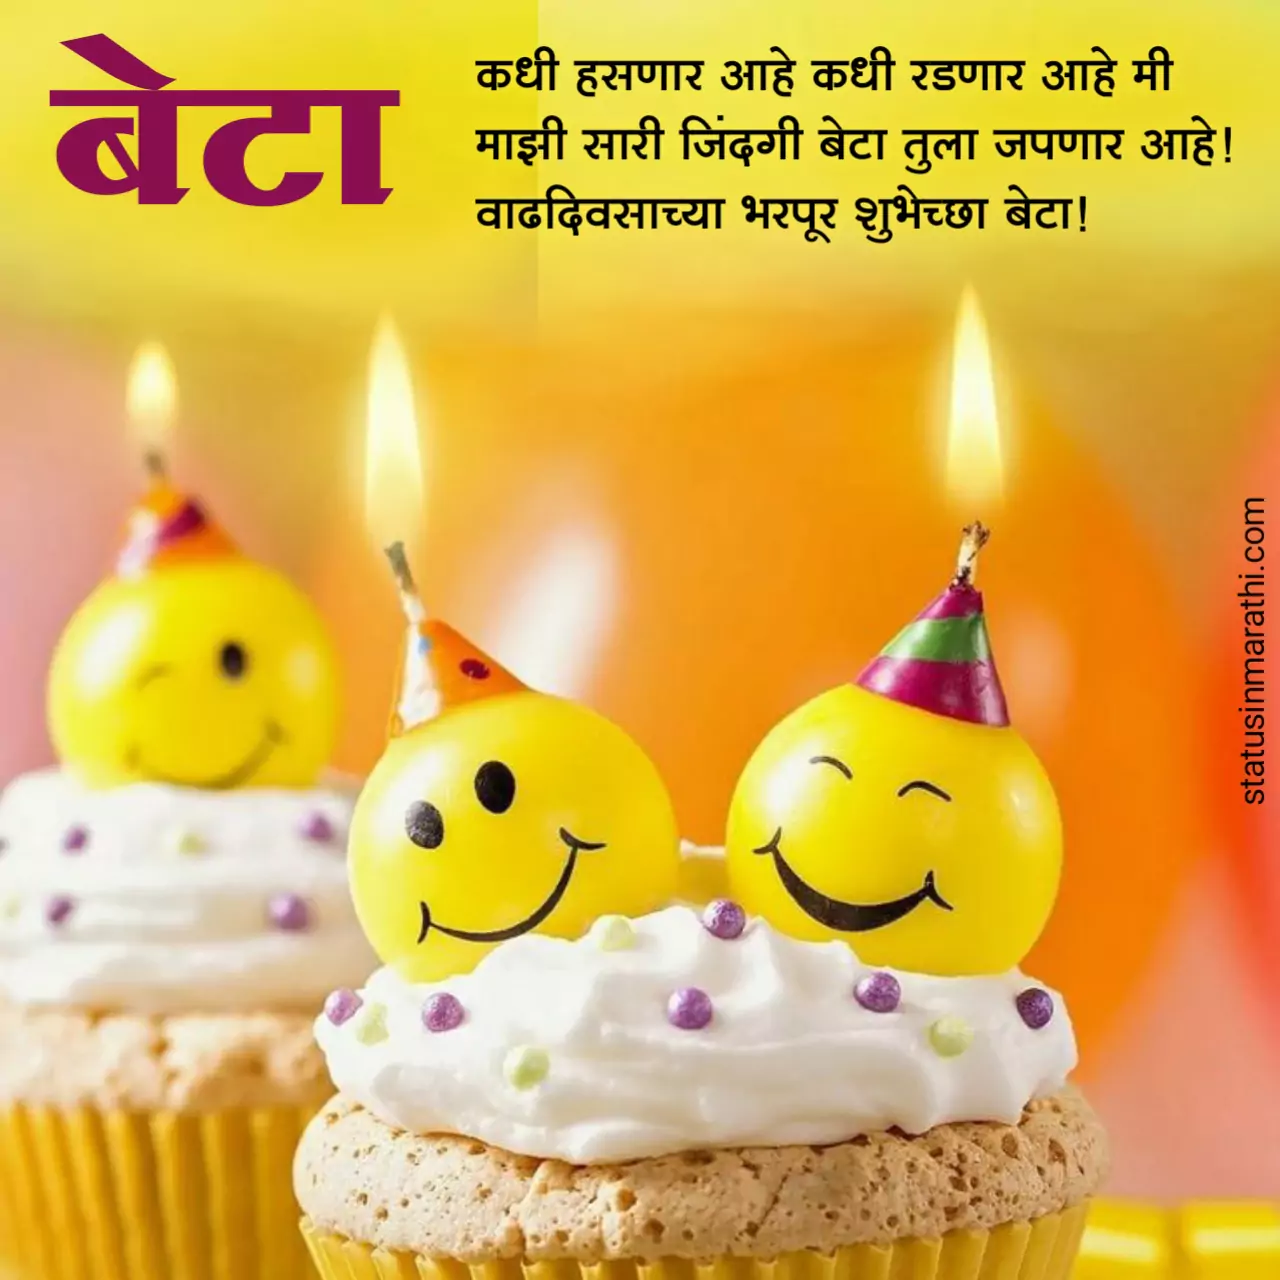 Son birthday wishes in marathi